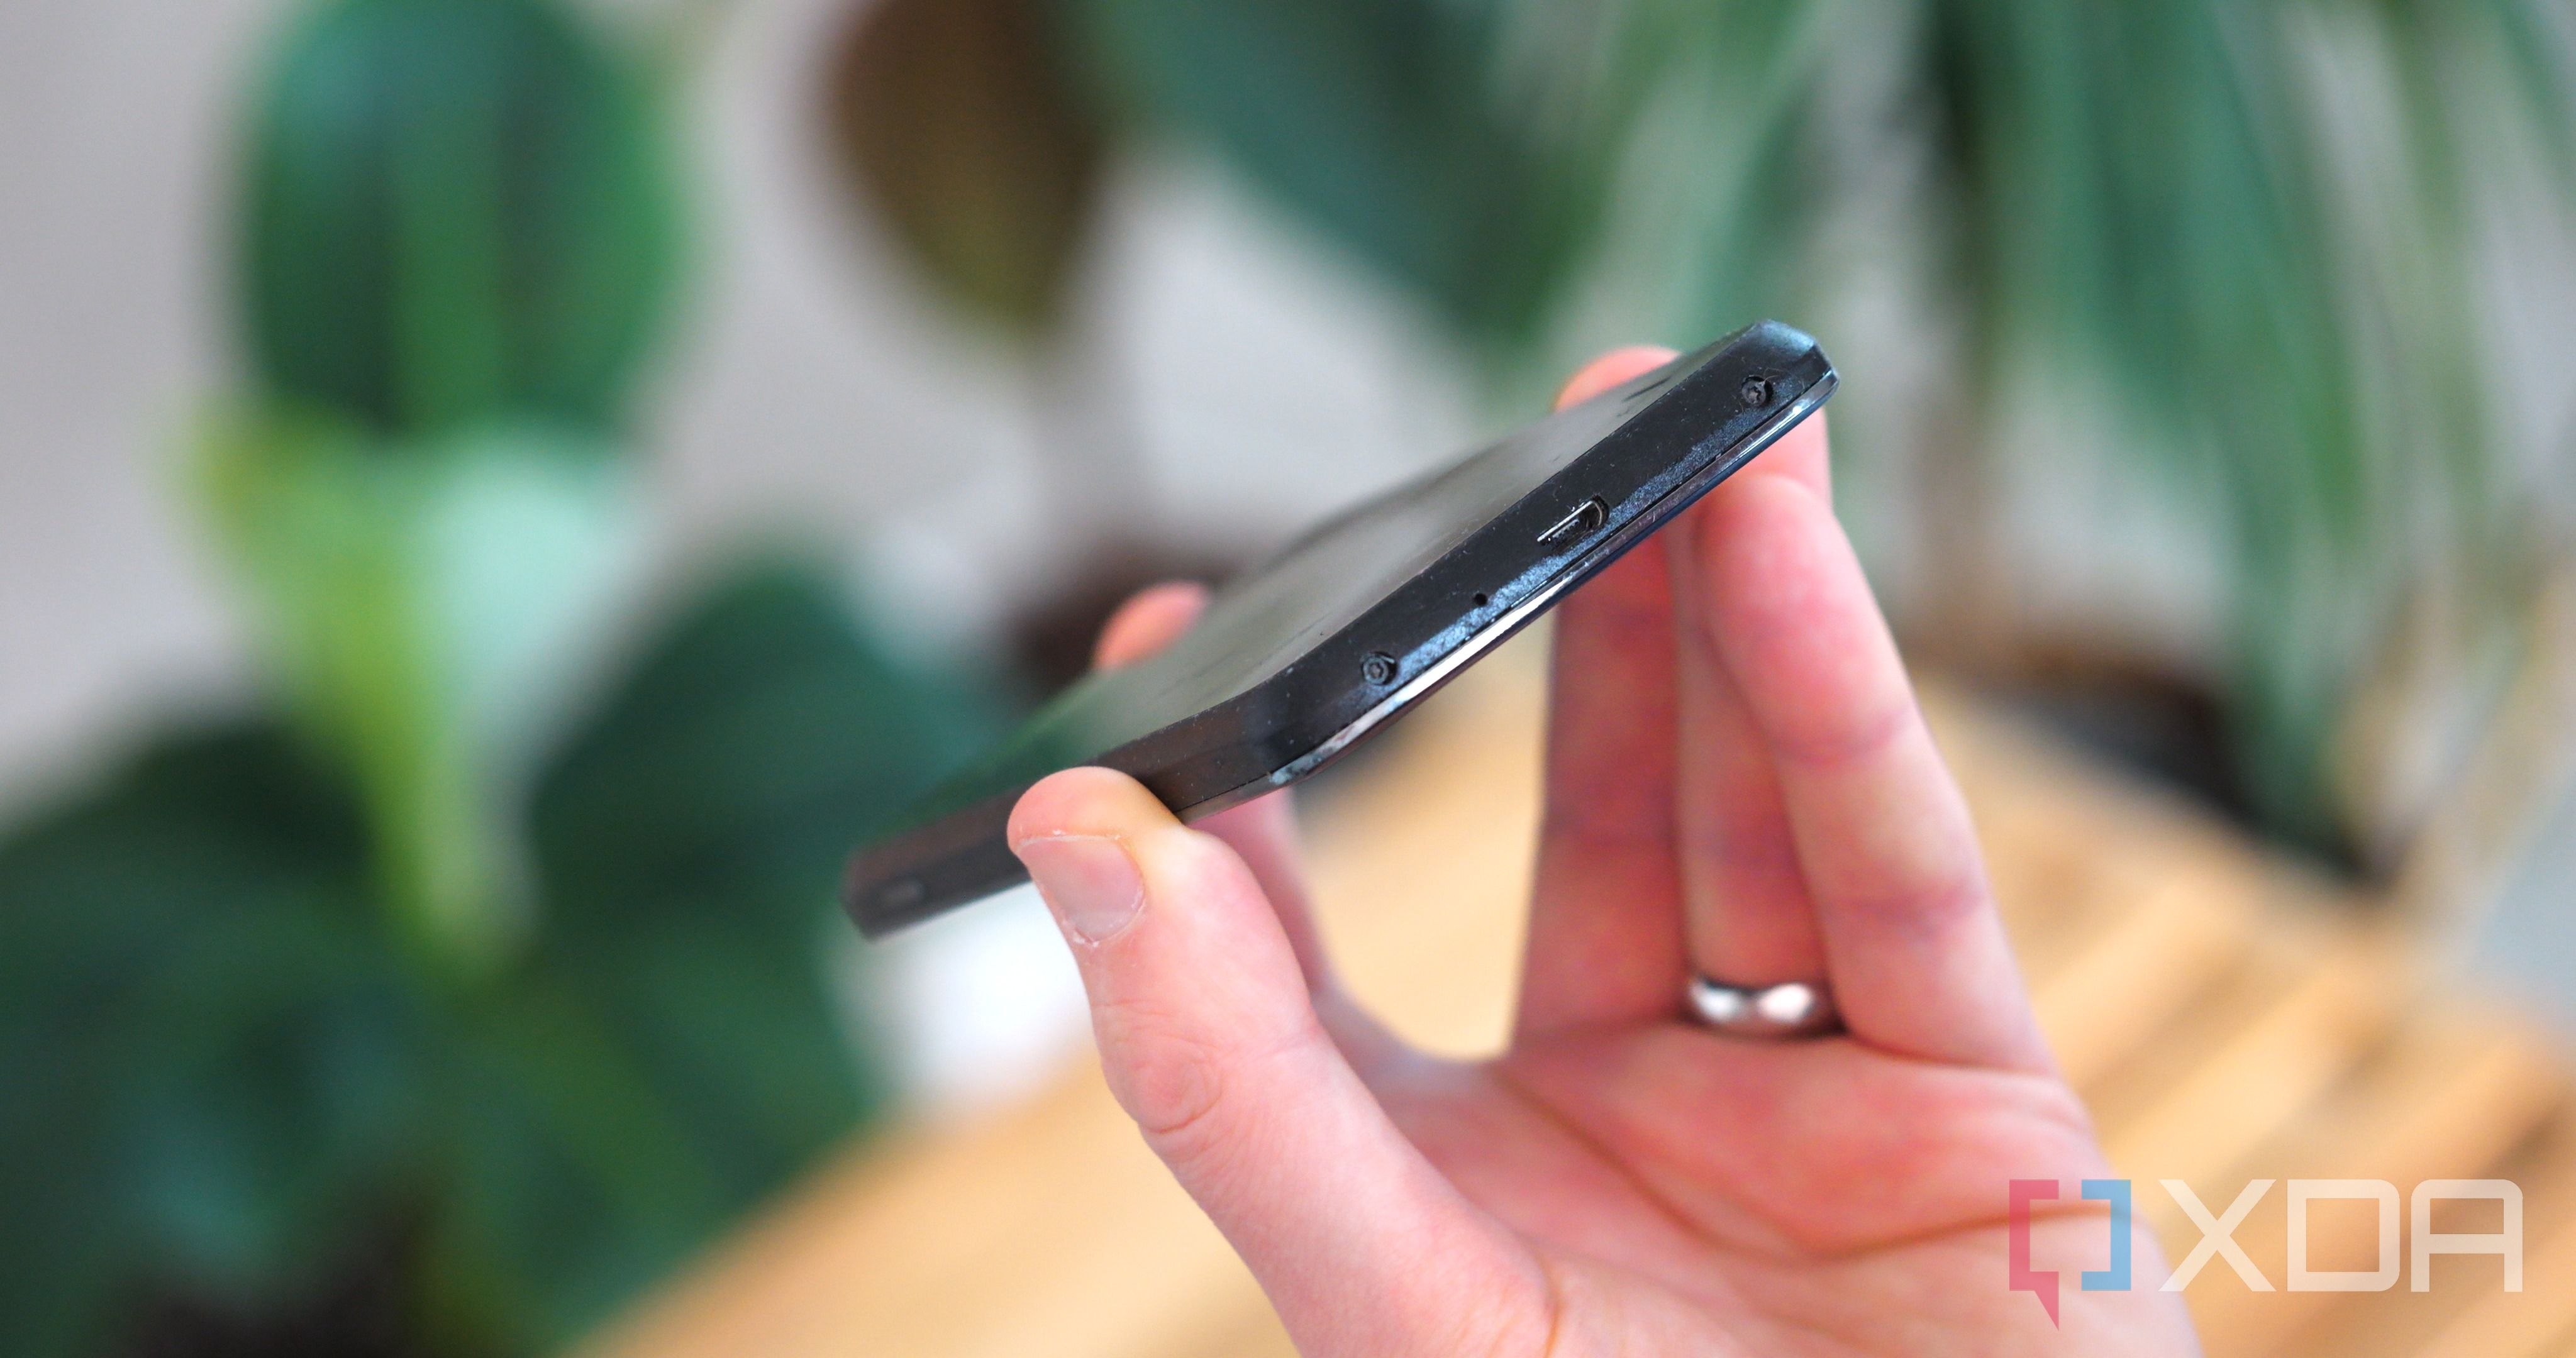 The rubber on the black Google Nexus 4